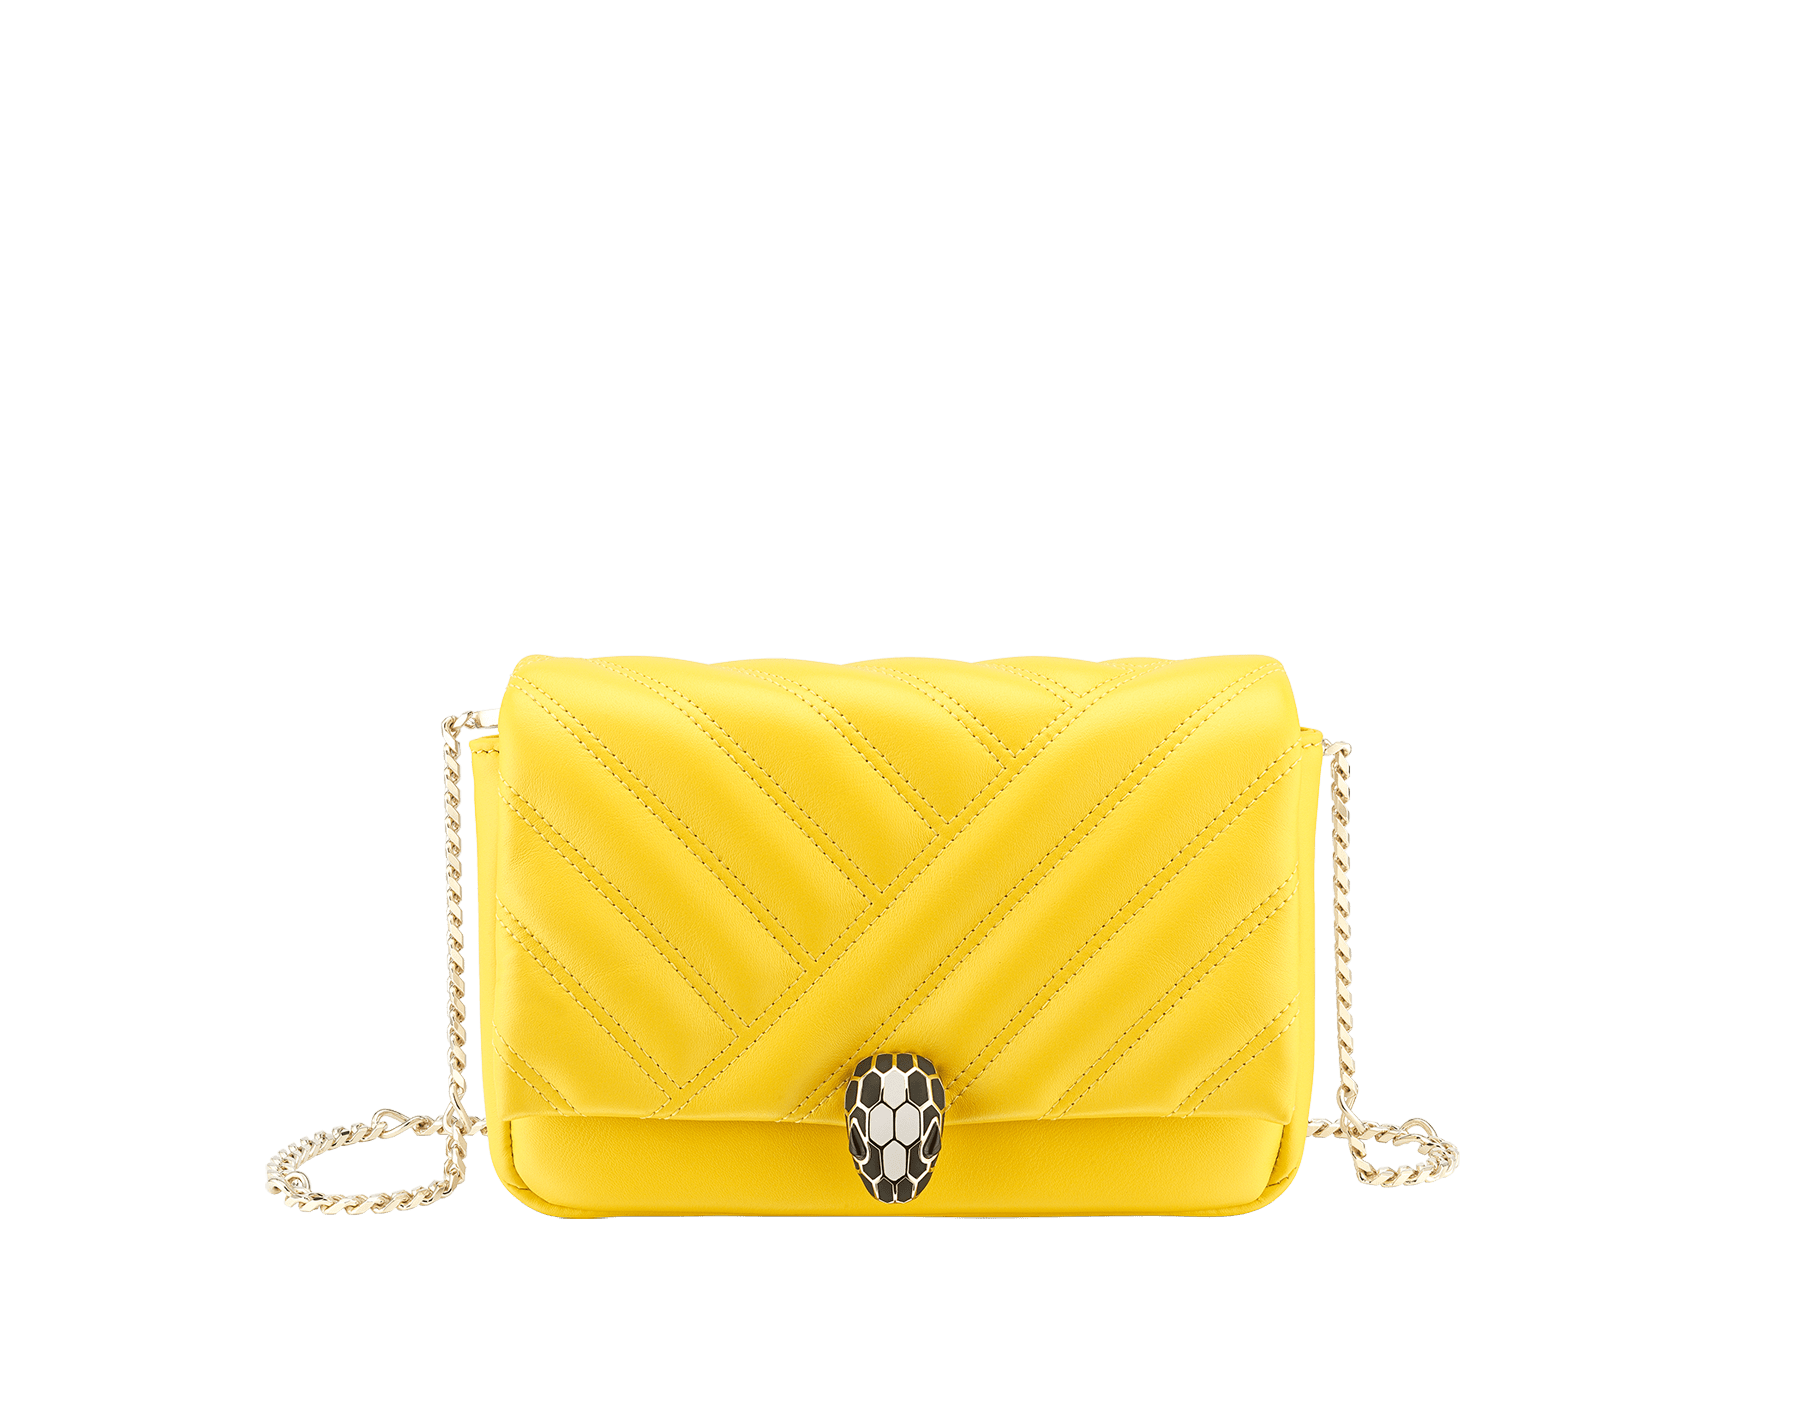 bvlgari yellow bag